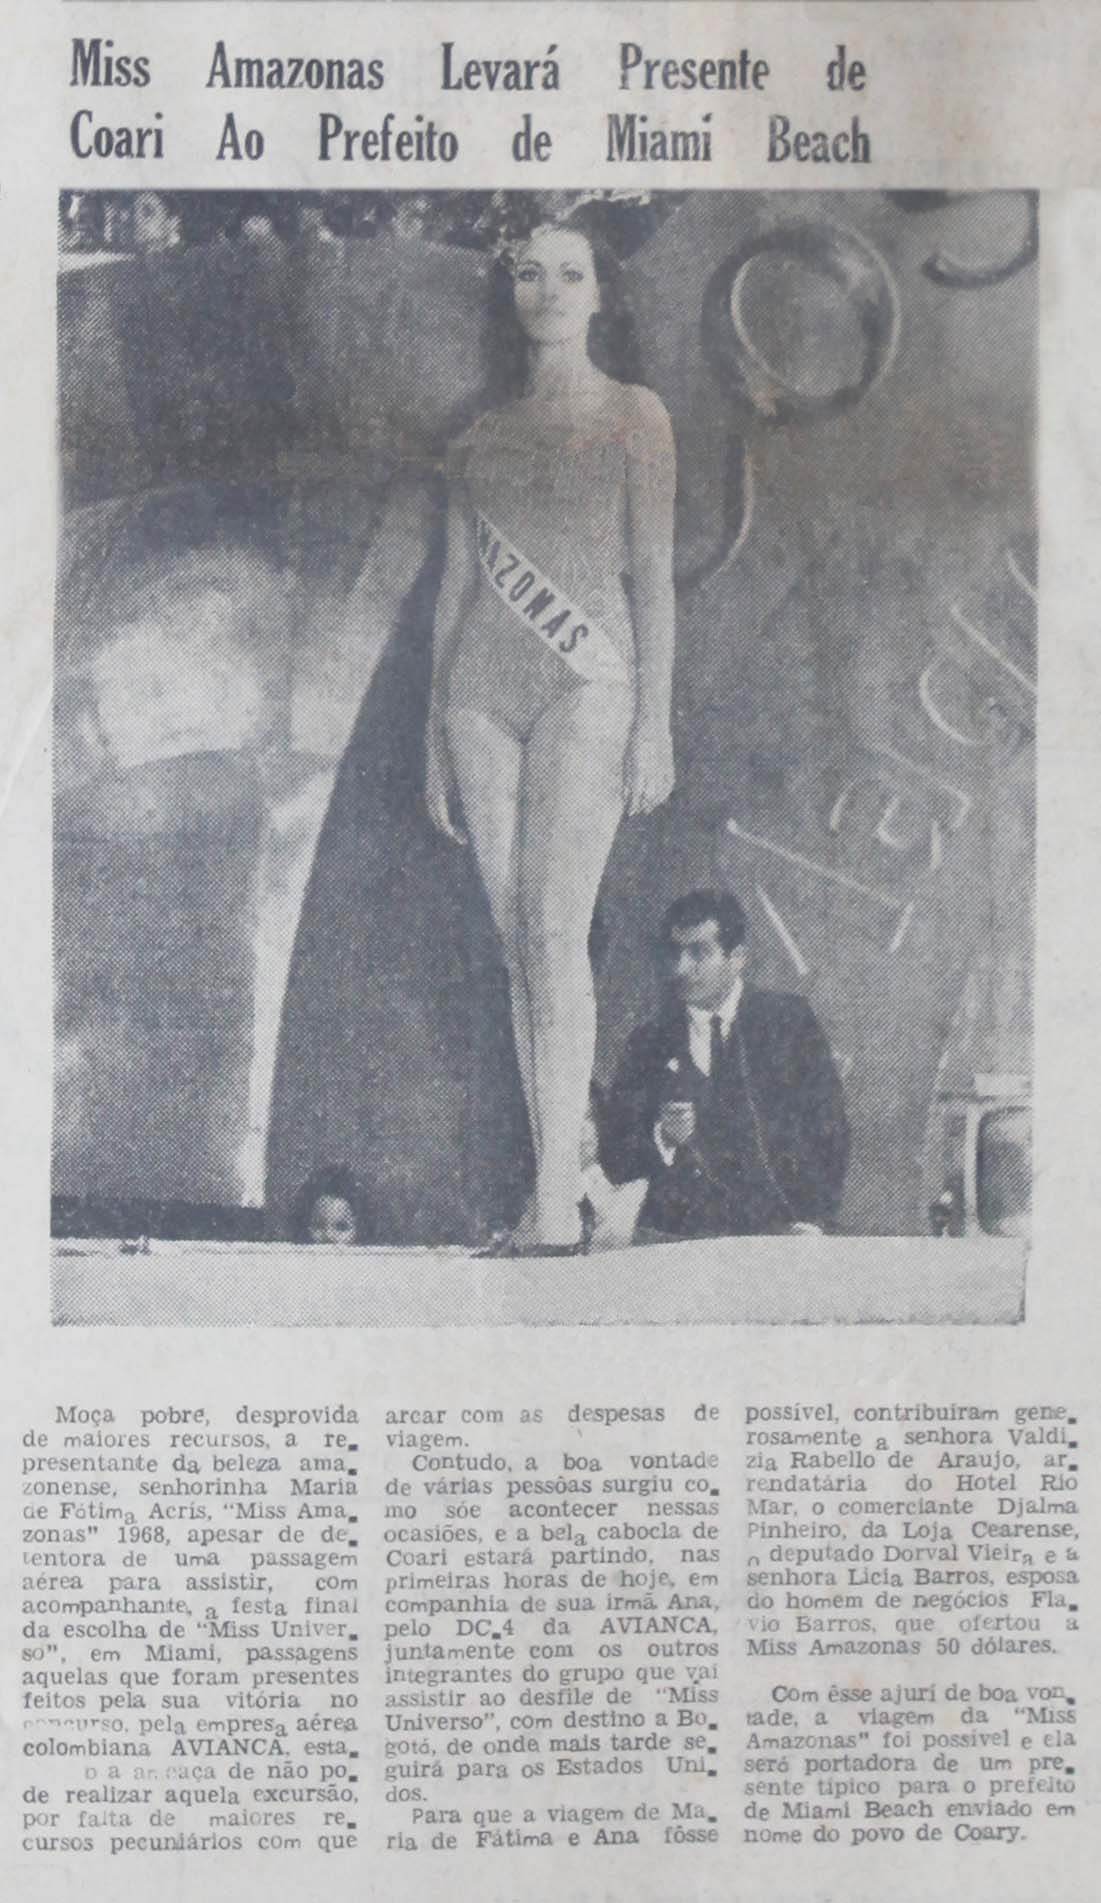 Maria de Fátima Acris: Miss Amazonas 1968